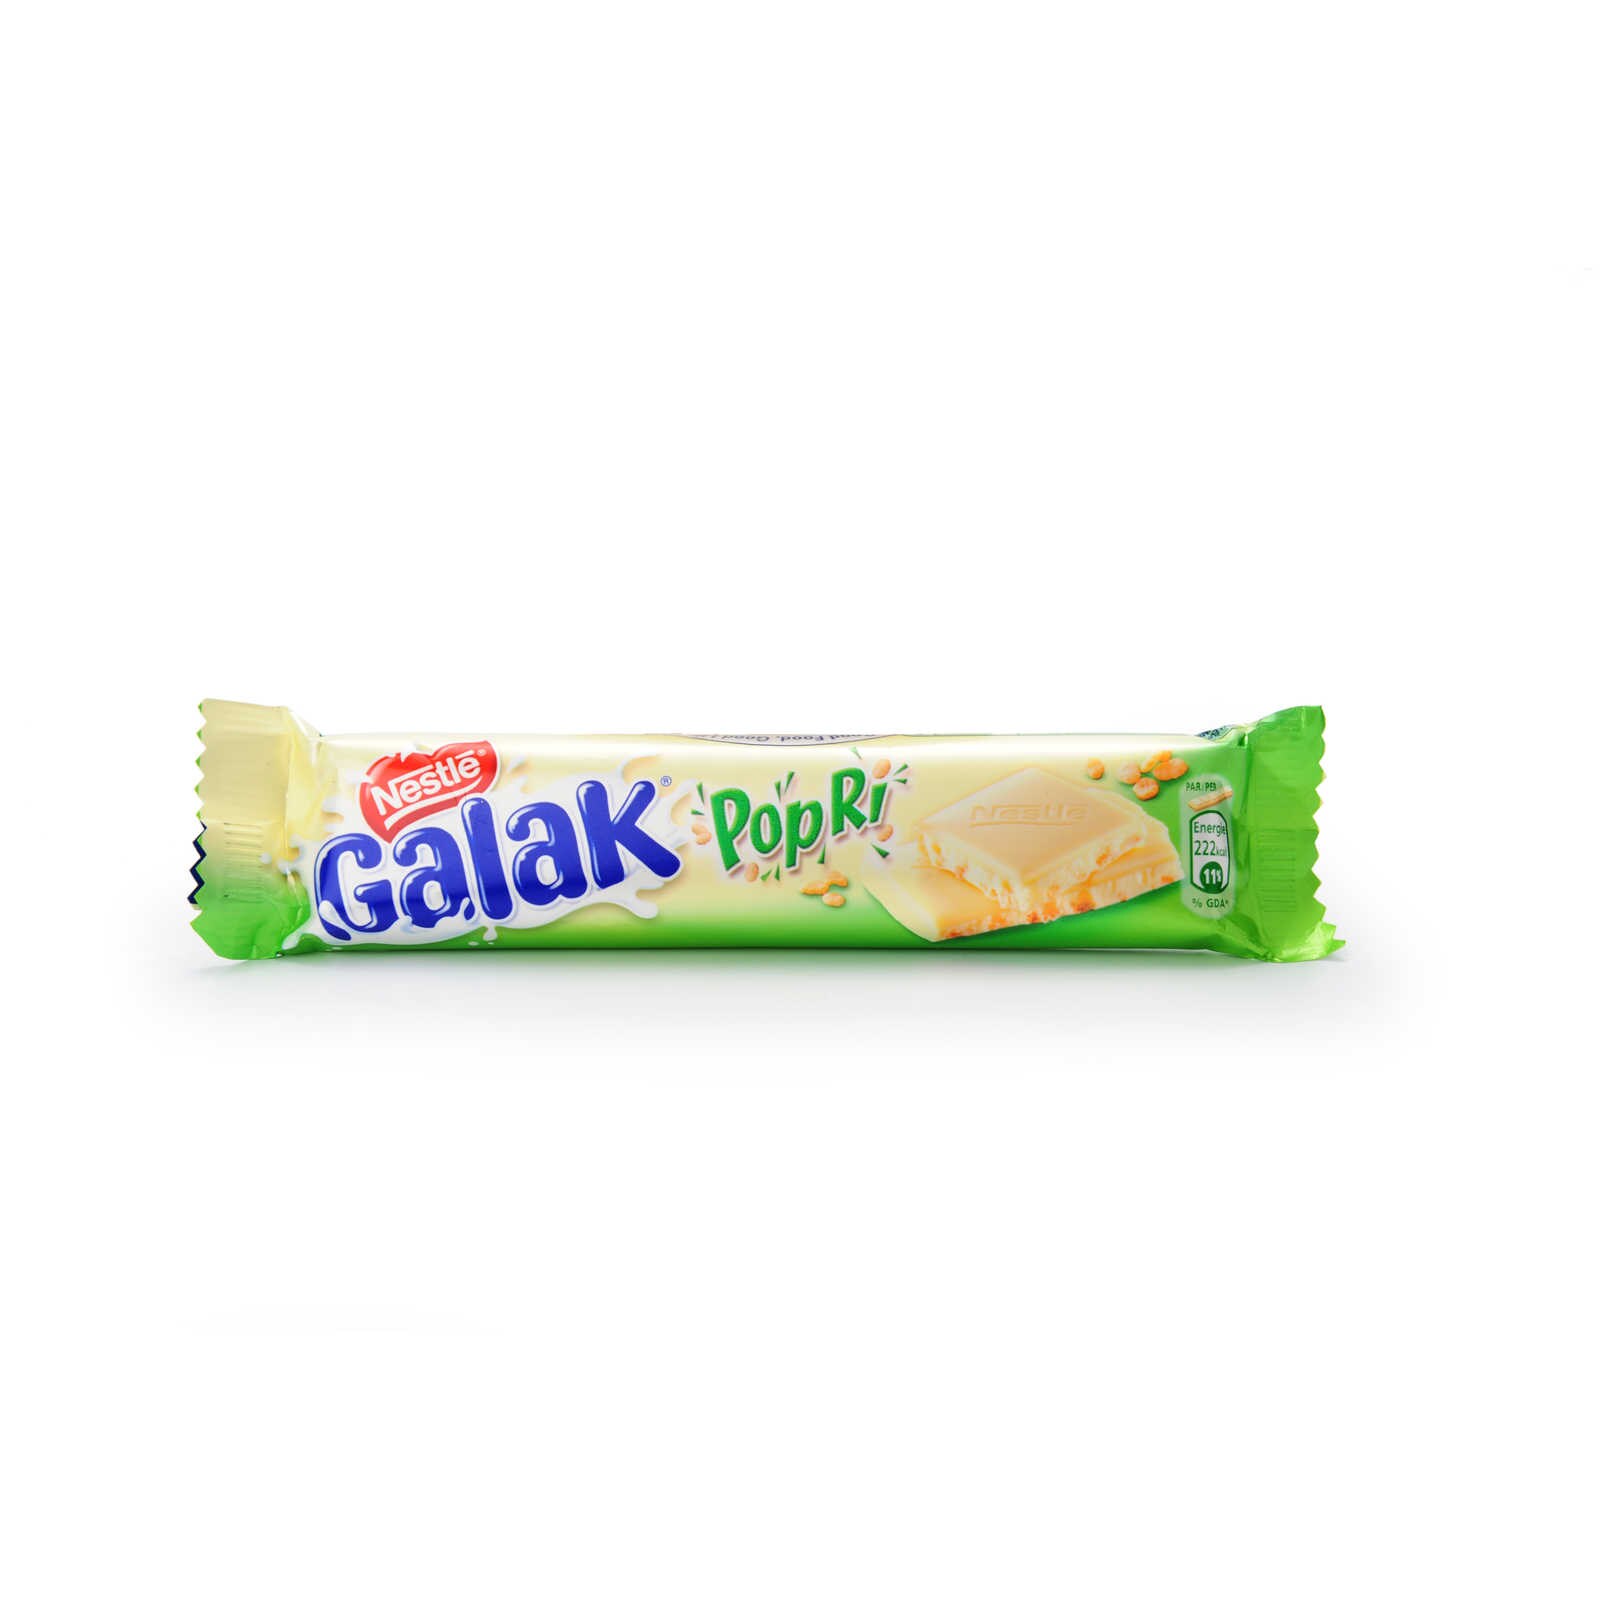 Nestlé-Galak